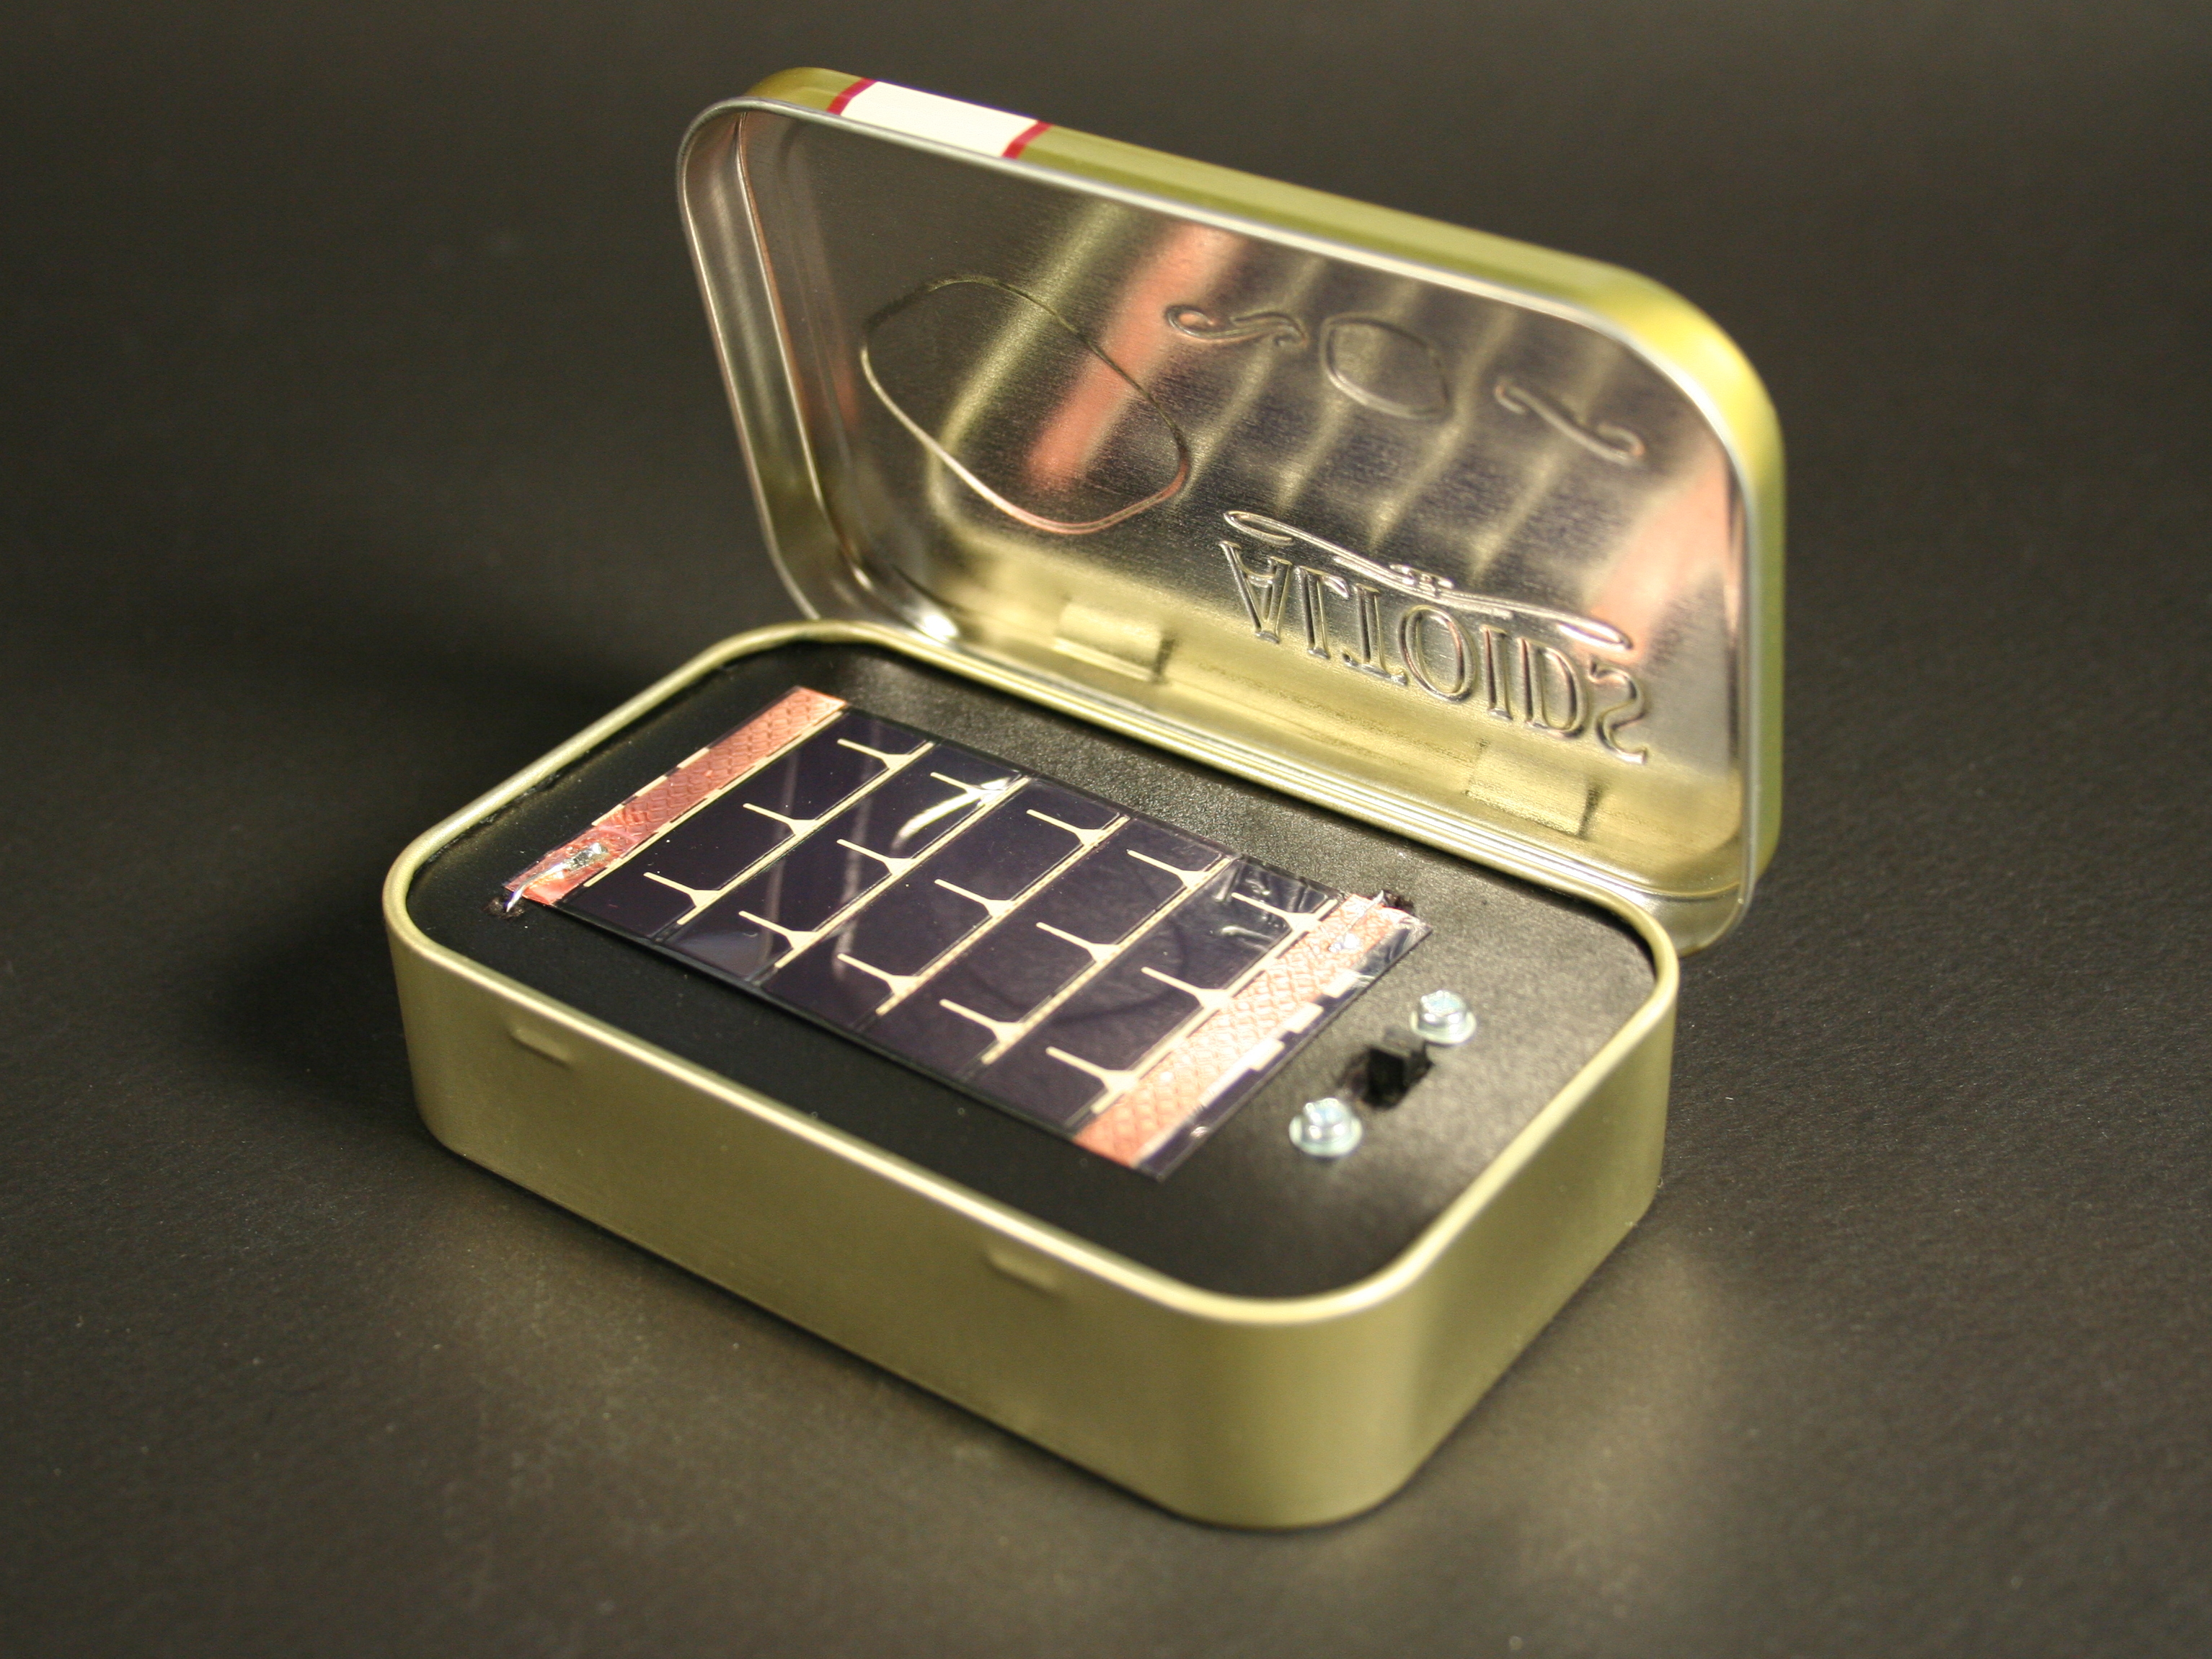 Build the Solar Theremin kit